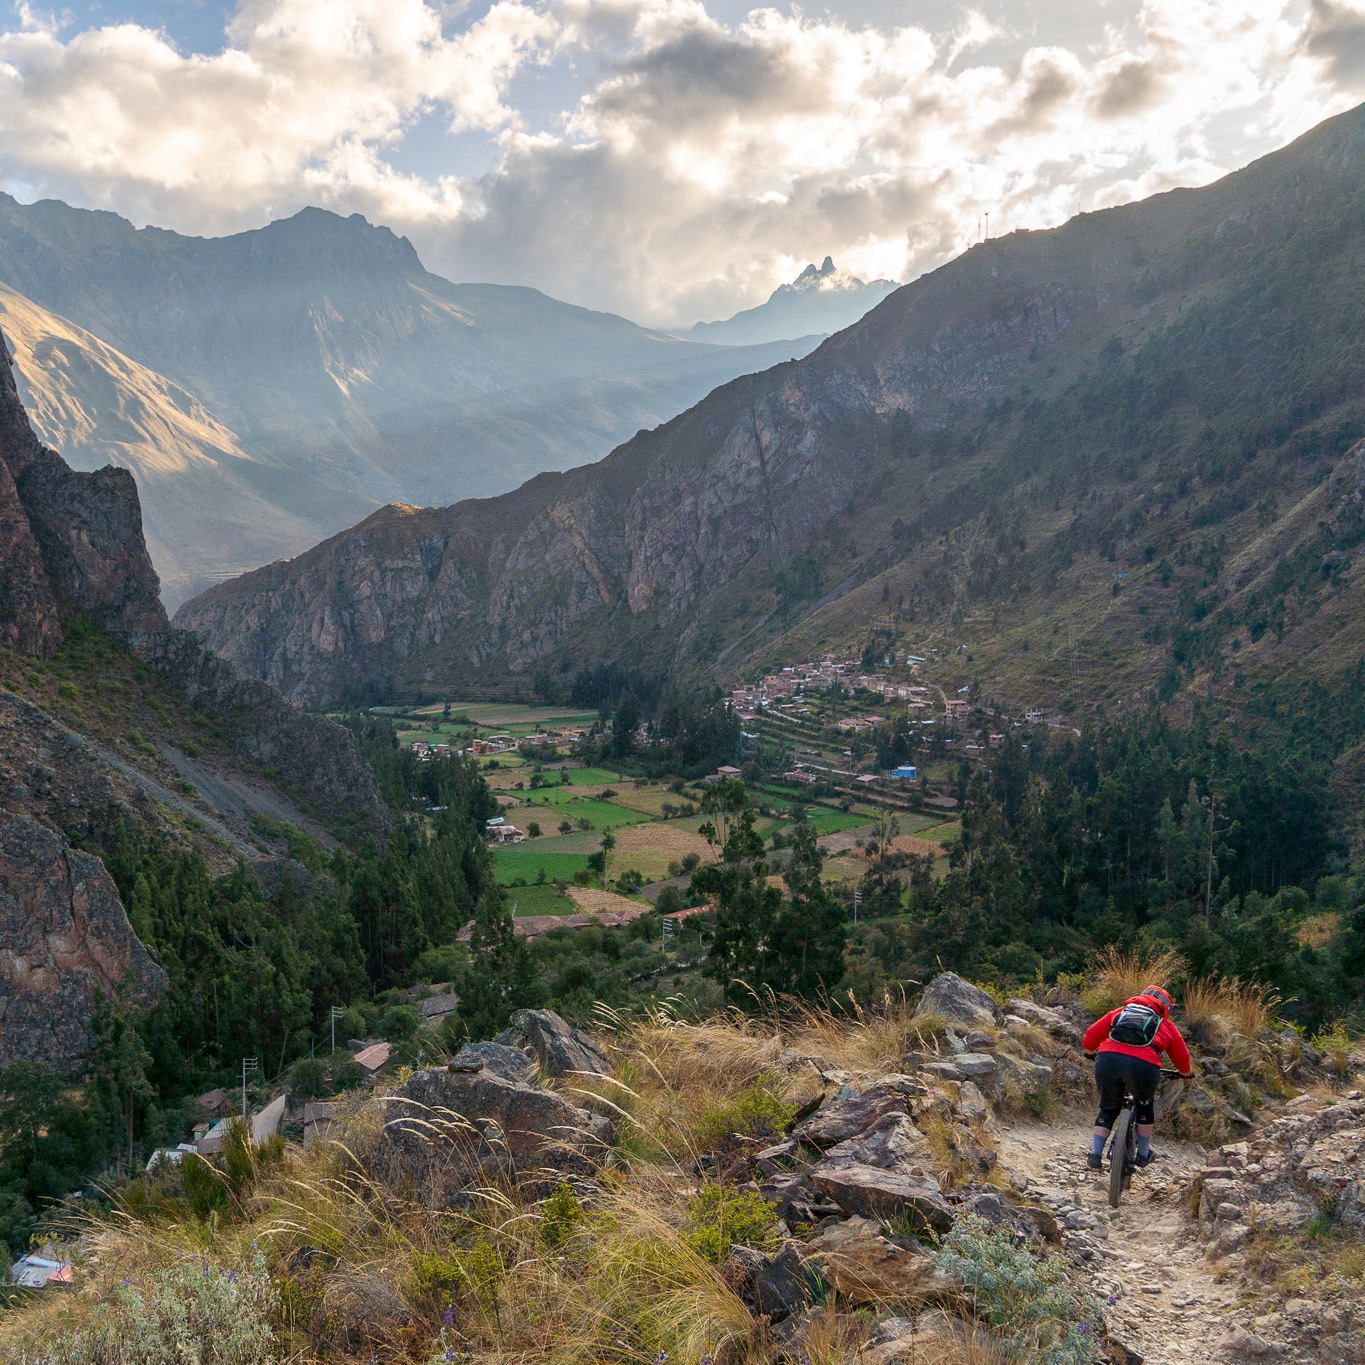 Emma mountain biking in down the Andes in Peru.